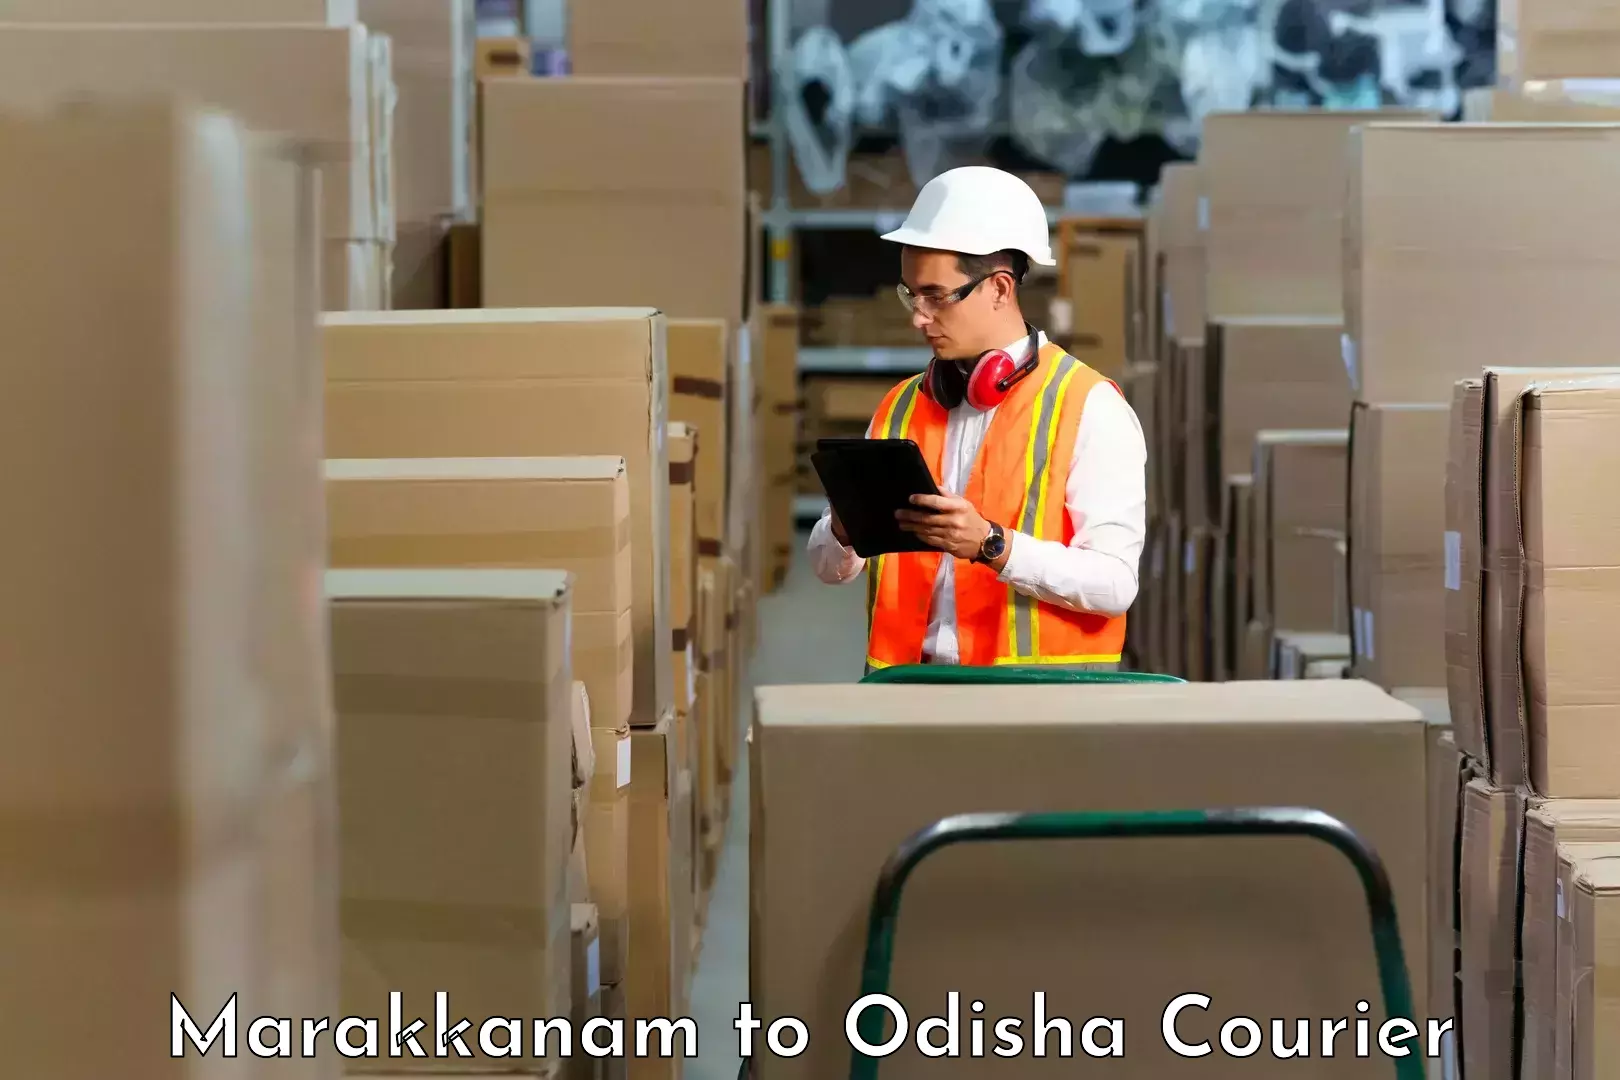 Professional courier handling Marakkanam to Ganjam